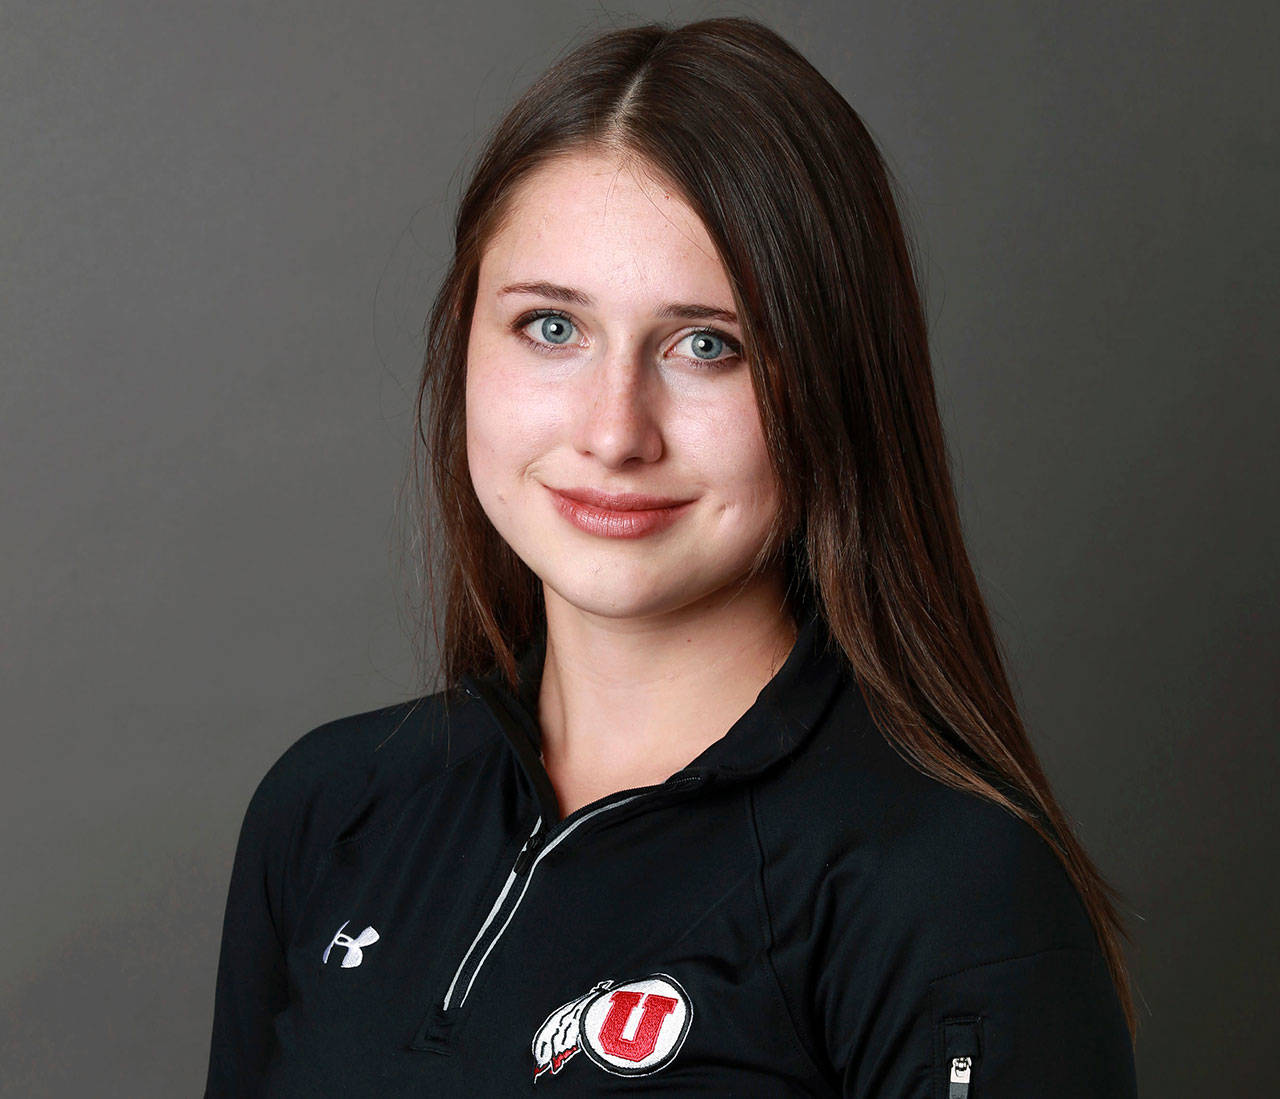 This Aug. 21 photo, provided by the University of Utah, shows Lauren McCluskey, a member of the University of Utah cross country and track and field team. (Steve C. Wilson/University of Utah via AP)